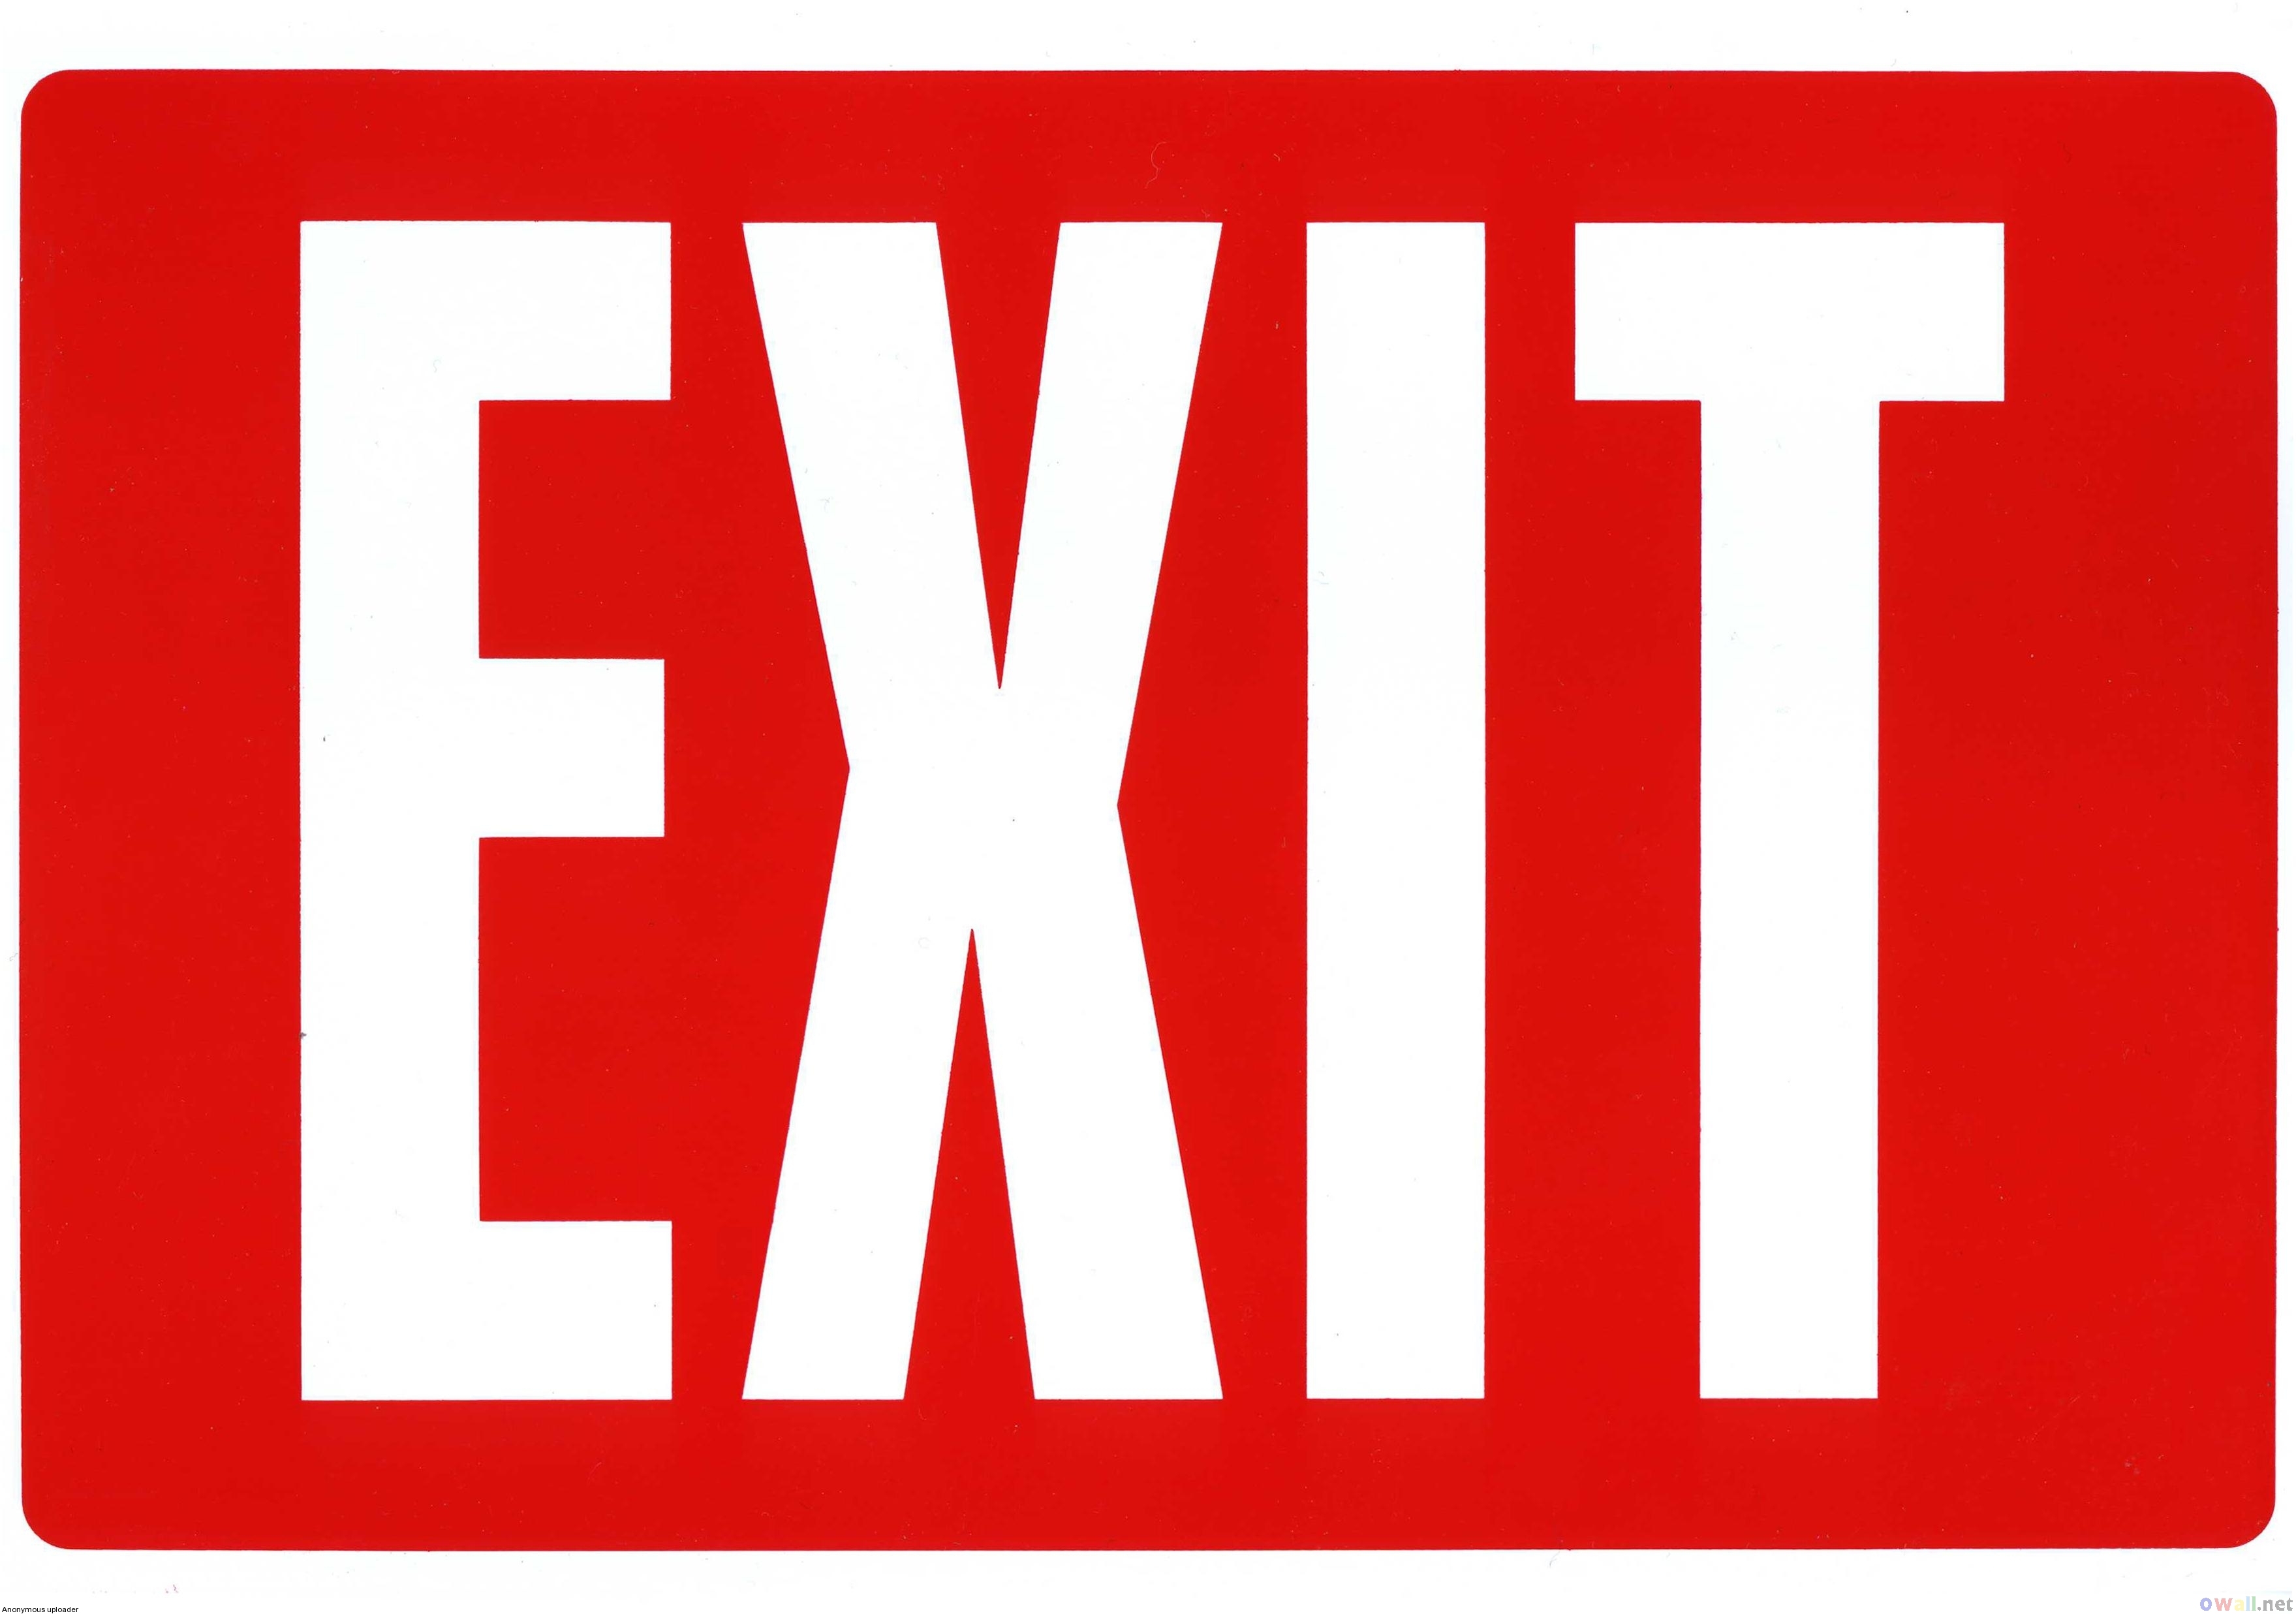 Orange exit icon